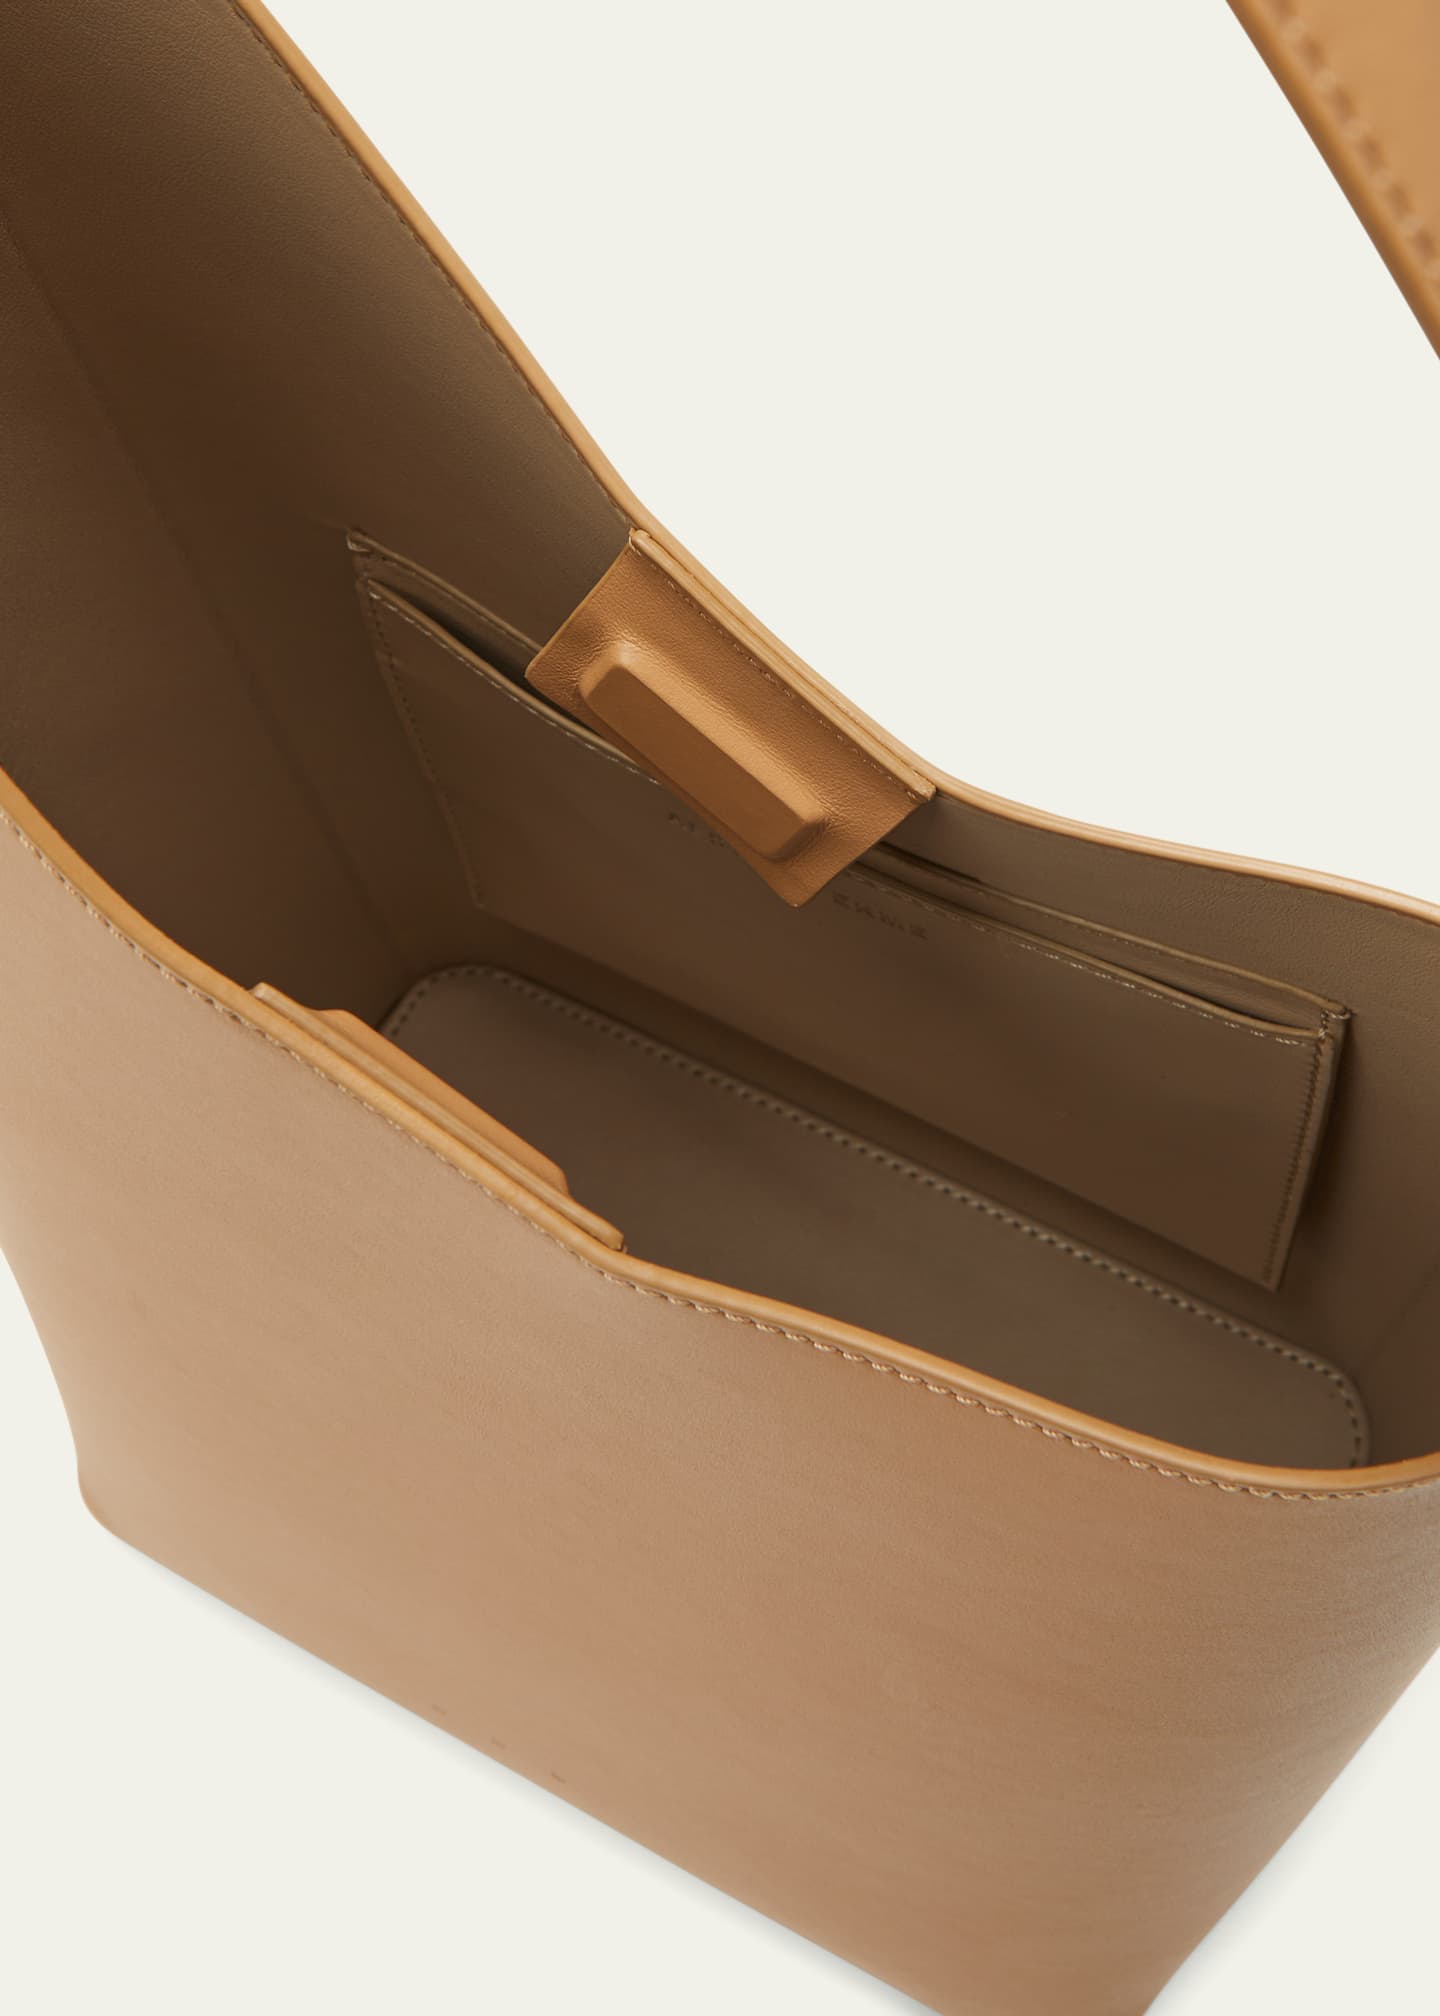 Aesther Ekme Sac Leather Shoulder Bag - Bergdorf Goodman